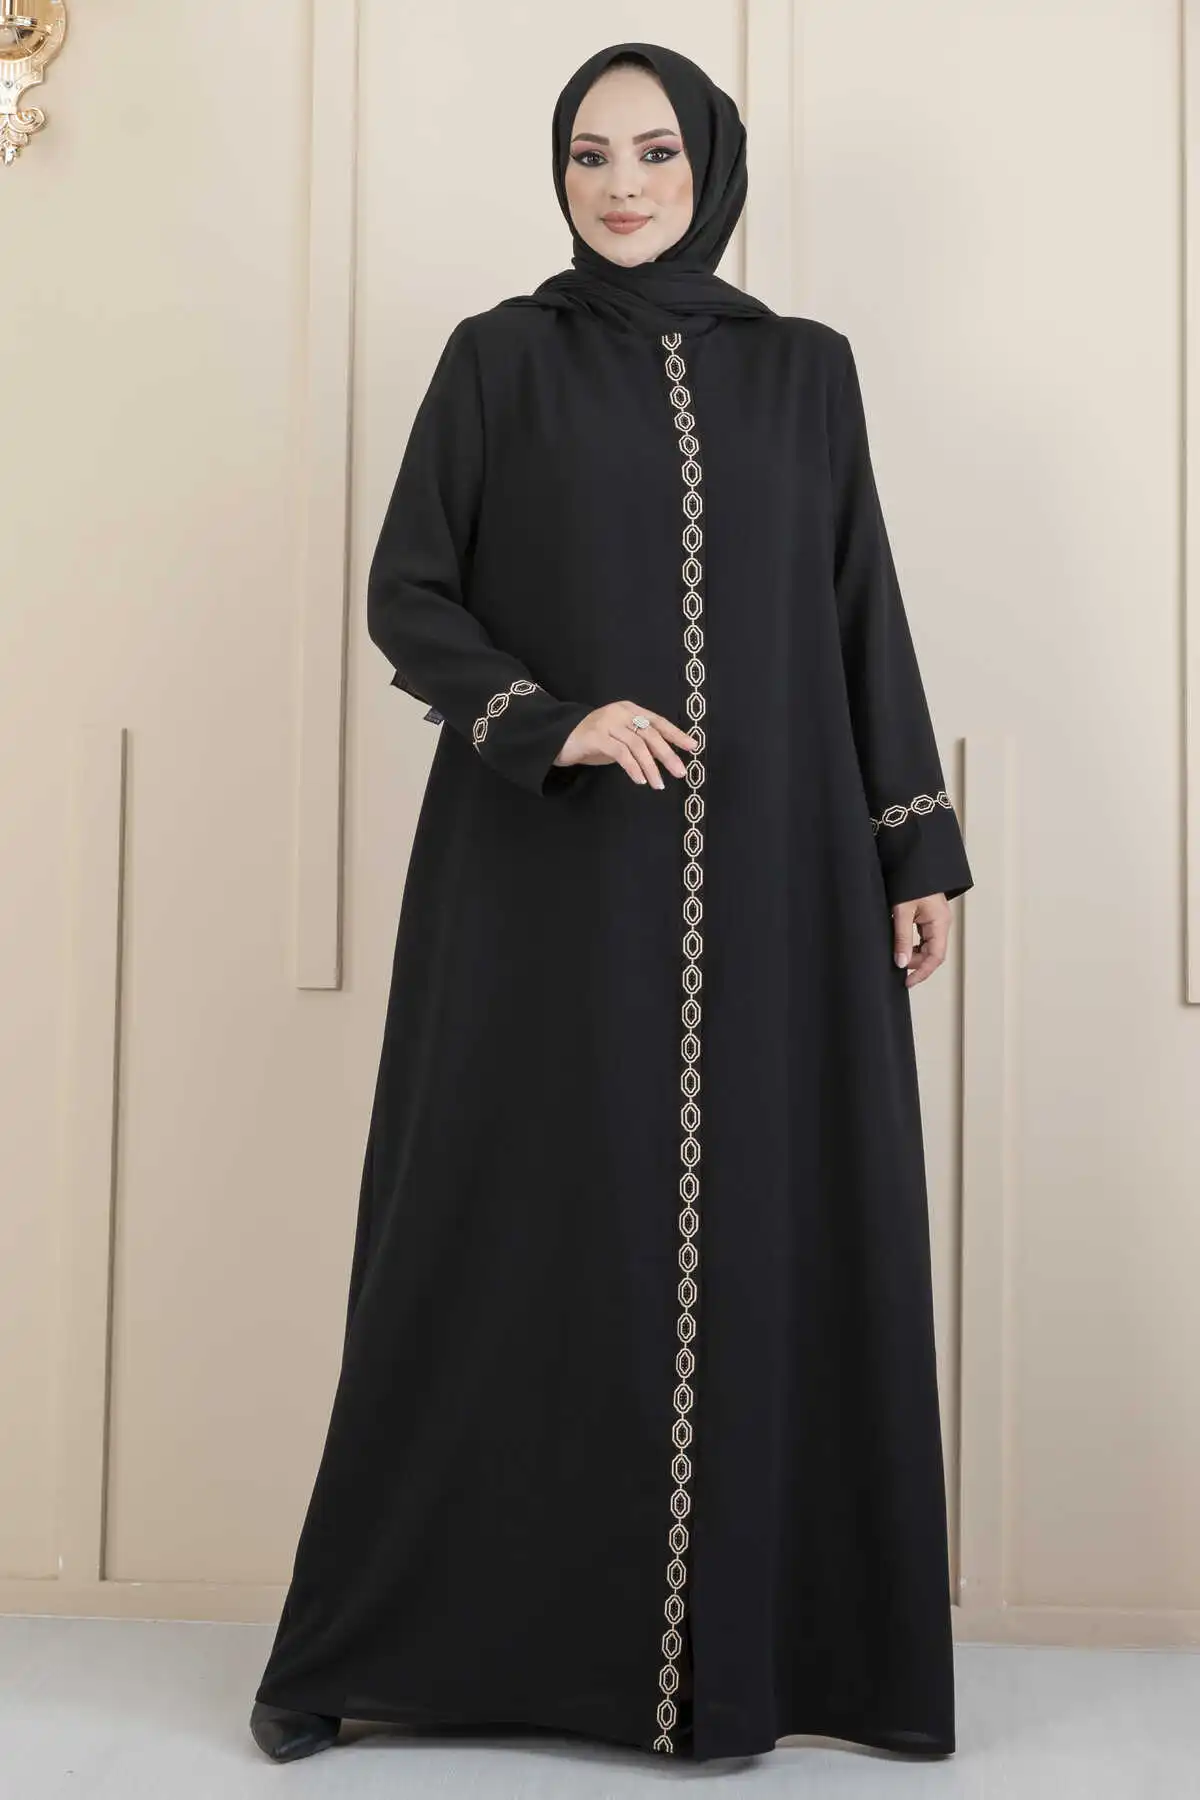 Black abaya Istanbul Styles